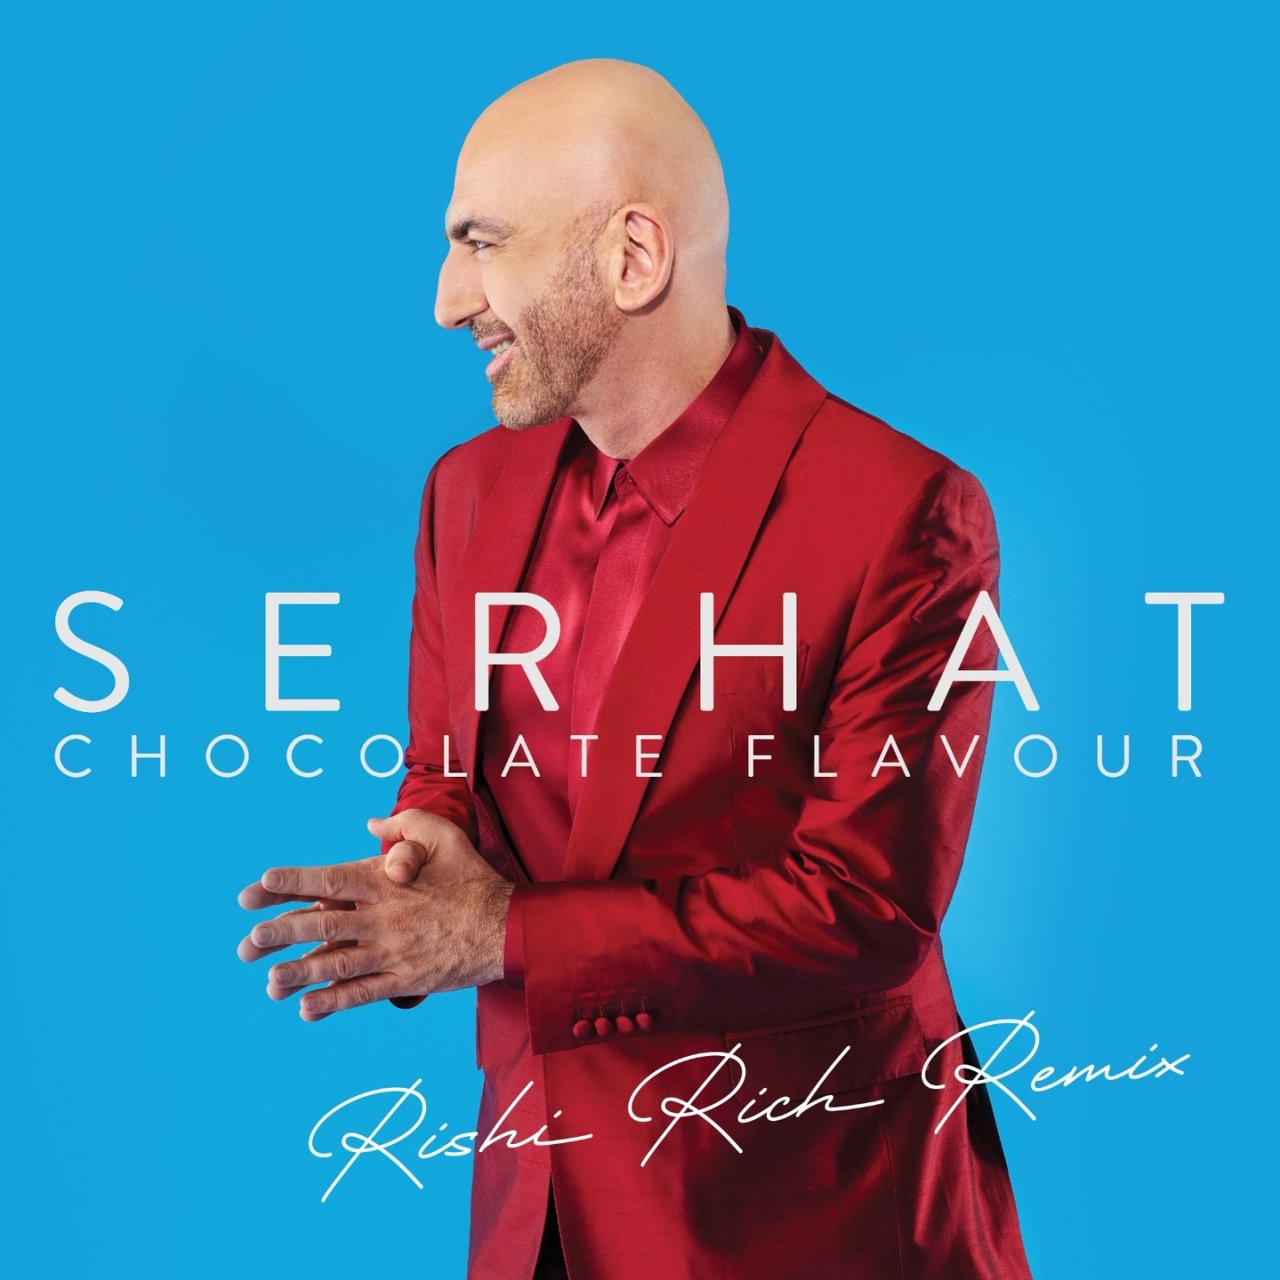 Serhat Chocolate Flavour (Rishi Rich Remix) cover artwork